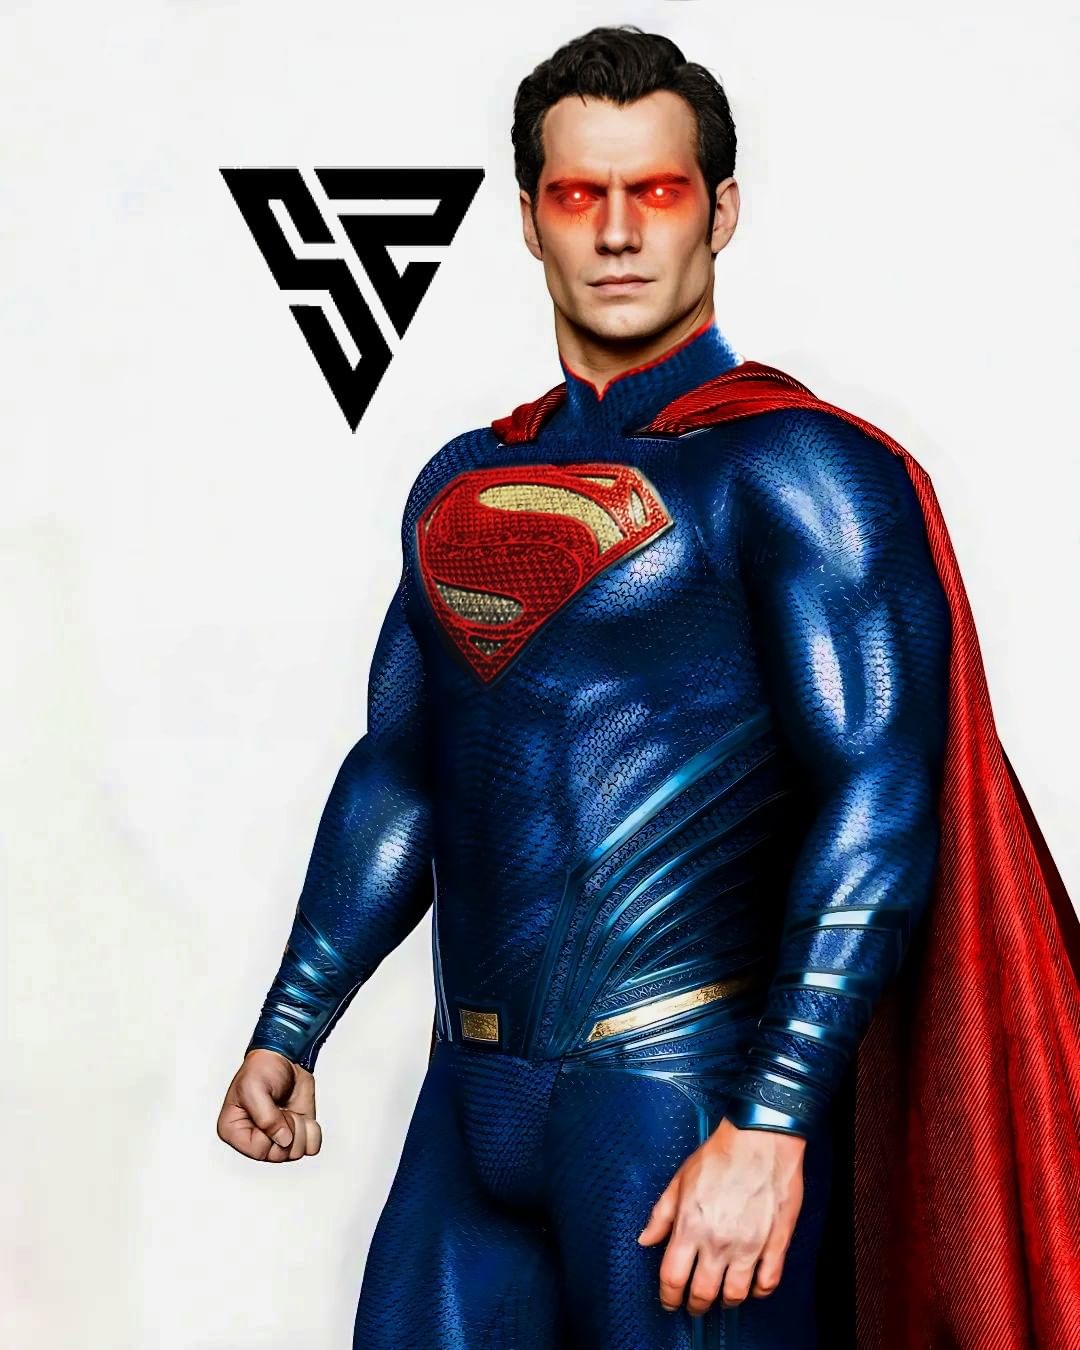 Henry Cavill/Superman Glow-Up Meme by TytorTheBarbarian on DeviantArt